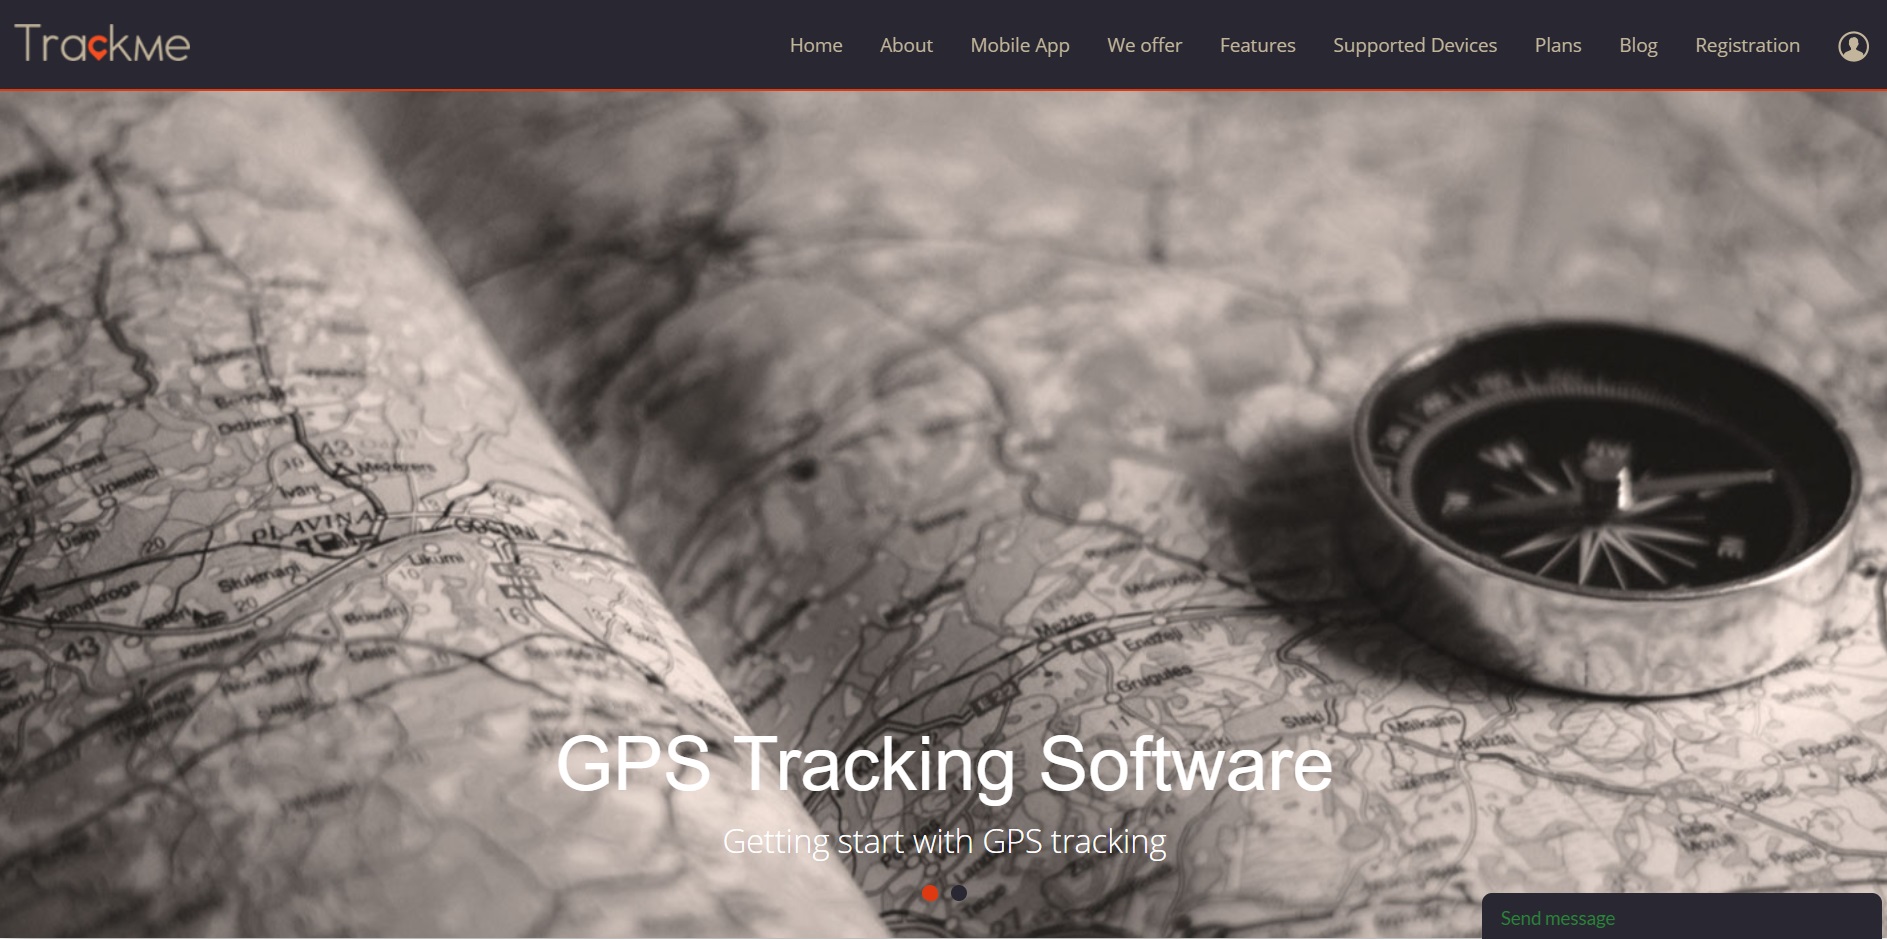 Trackme gps software